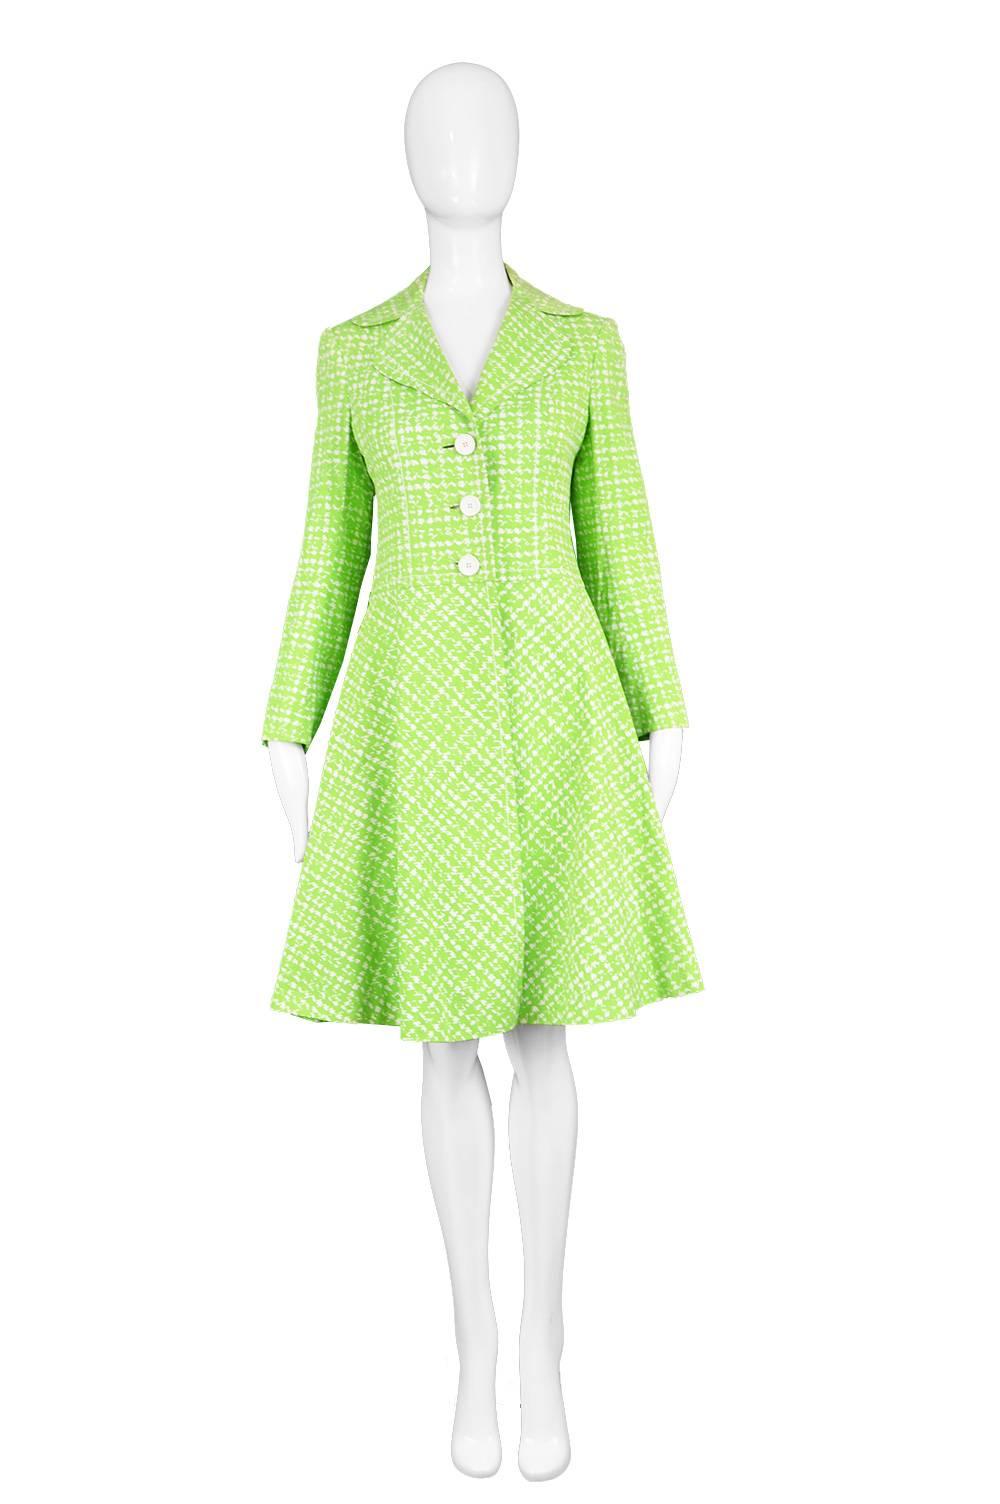 Diorling by Christian Dior London Vintage Green & White Cotton Mod Coat, 1960s

Size: UK 6-8/  US 2-4/ EU 34-36. Please check measurements.
Bust - 32” / 81cm
Waist - 30” / 76cm
Hips - 44” / 112cm
Length (Shoulder to Hem) - 37” / 94cm
Shoulder to